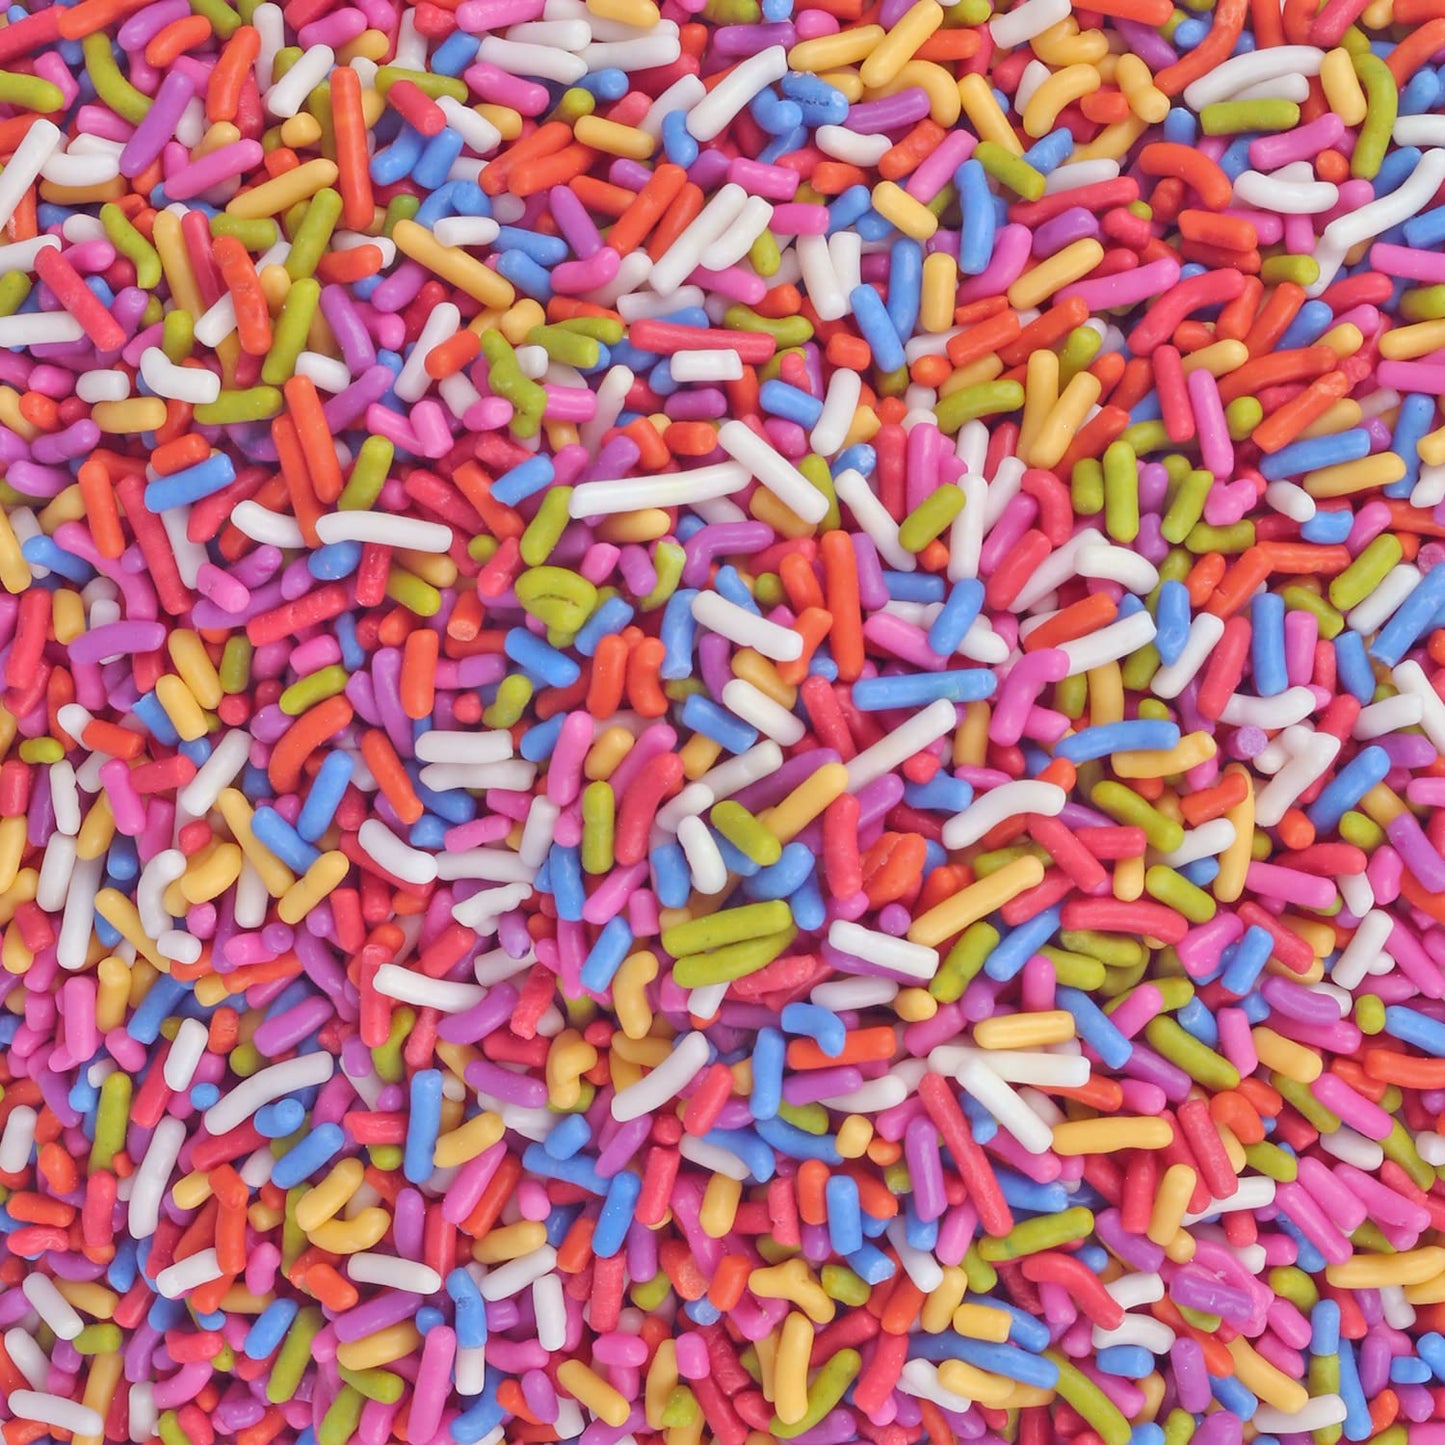 Natural Rainbow Sprinkles - 14 Ounces - Dye-free Rainbow Sprinkle Jimmies - Non-GMO Ice Cream Toppings - Kosher Sprinkles